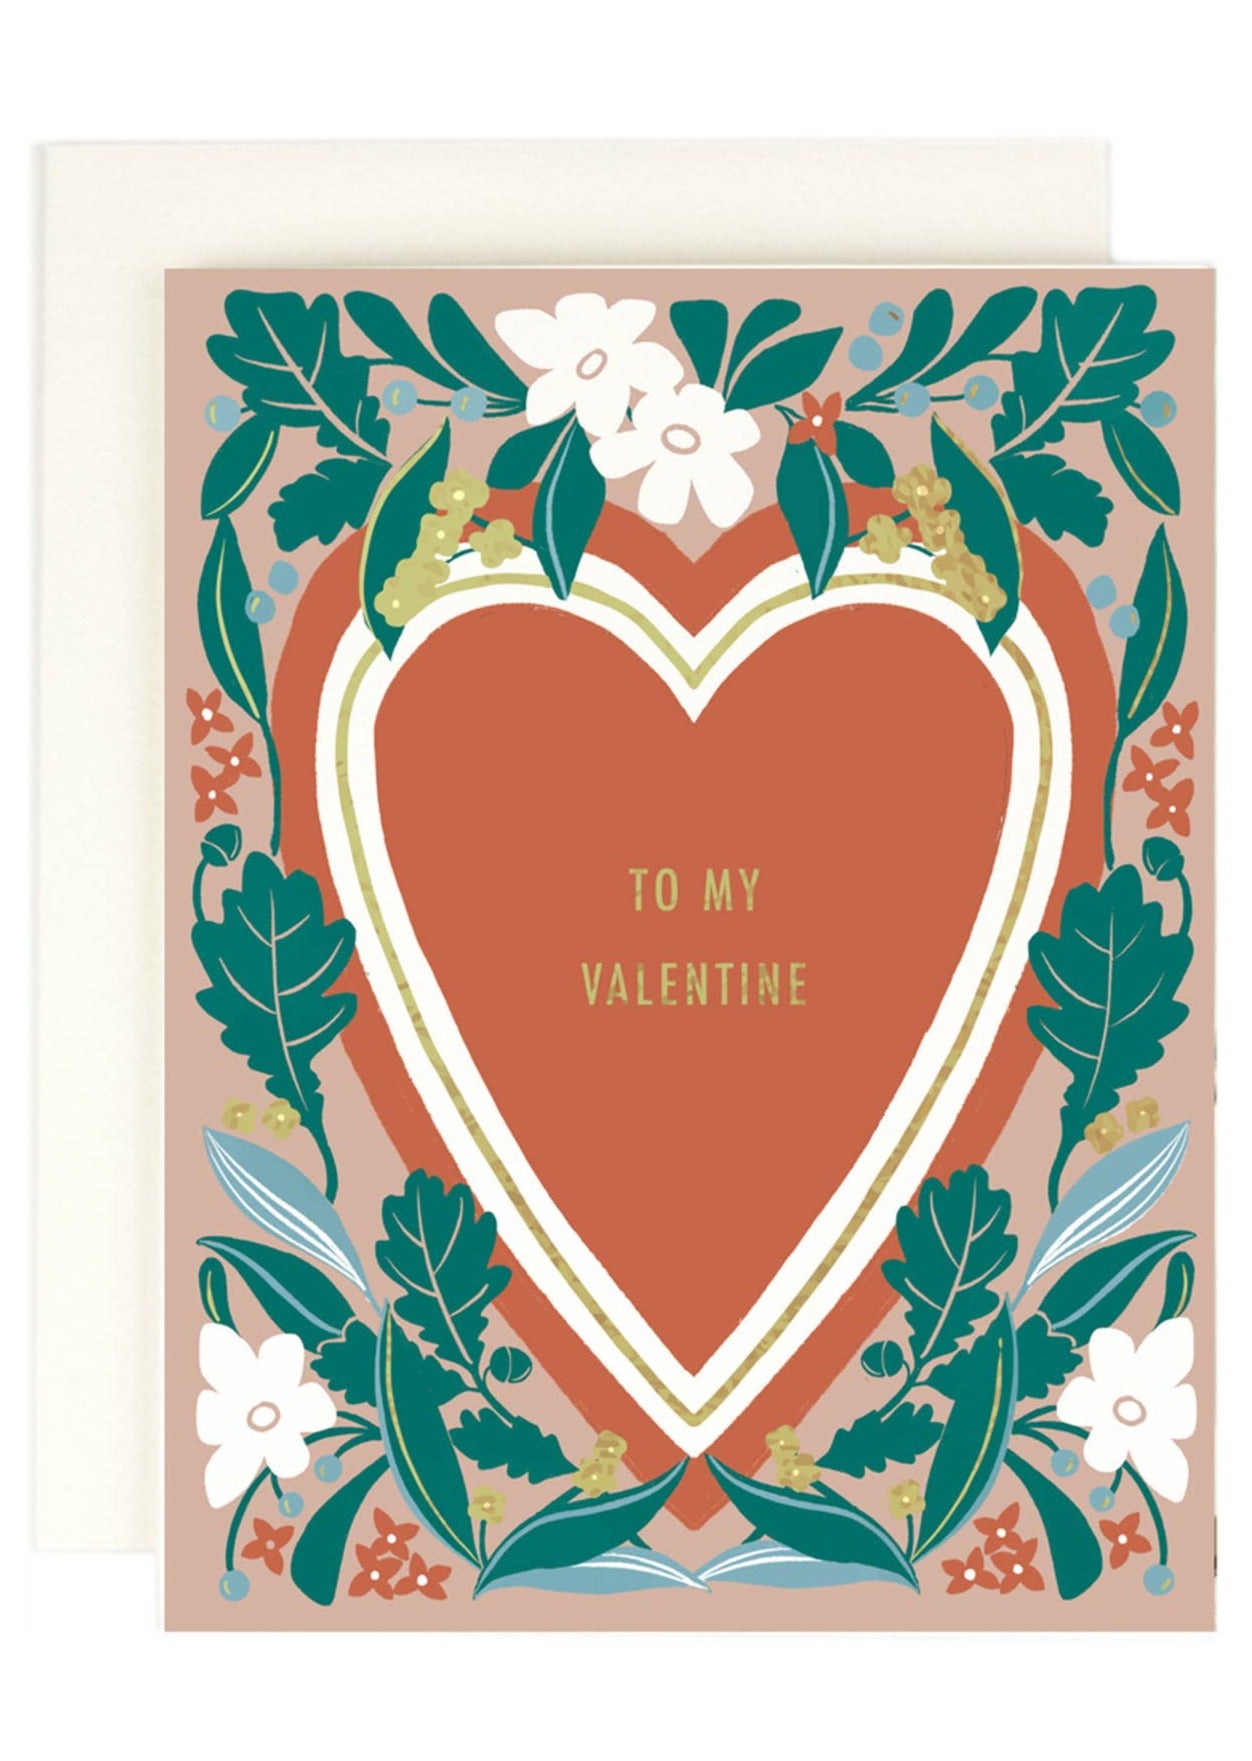 To My Valentine Card